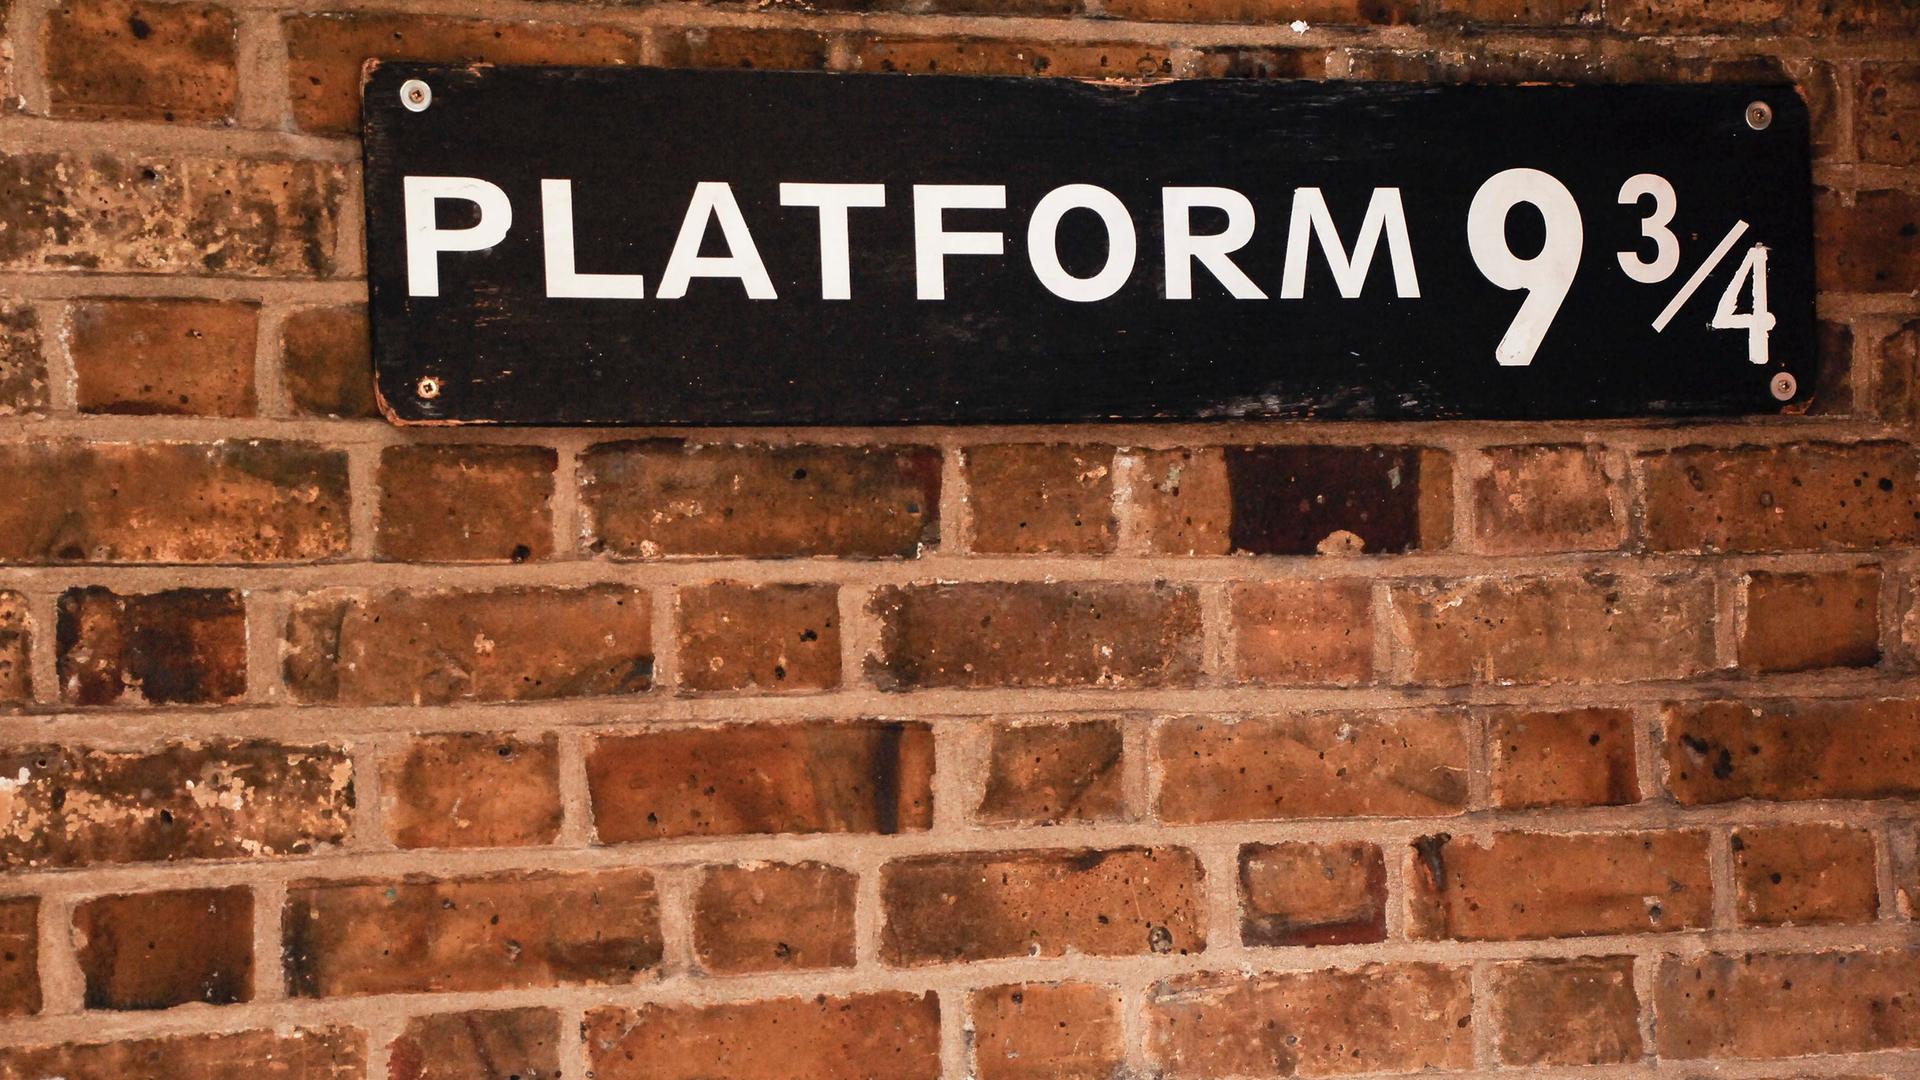 Am Bahnhof Kings Cross in London steht das Schild "Platform 9/3/4"